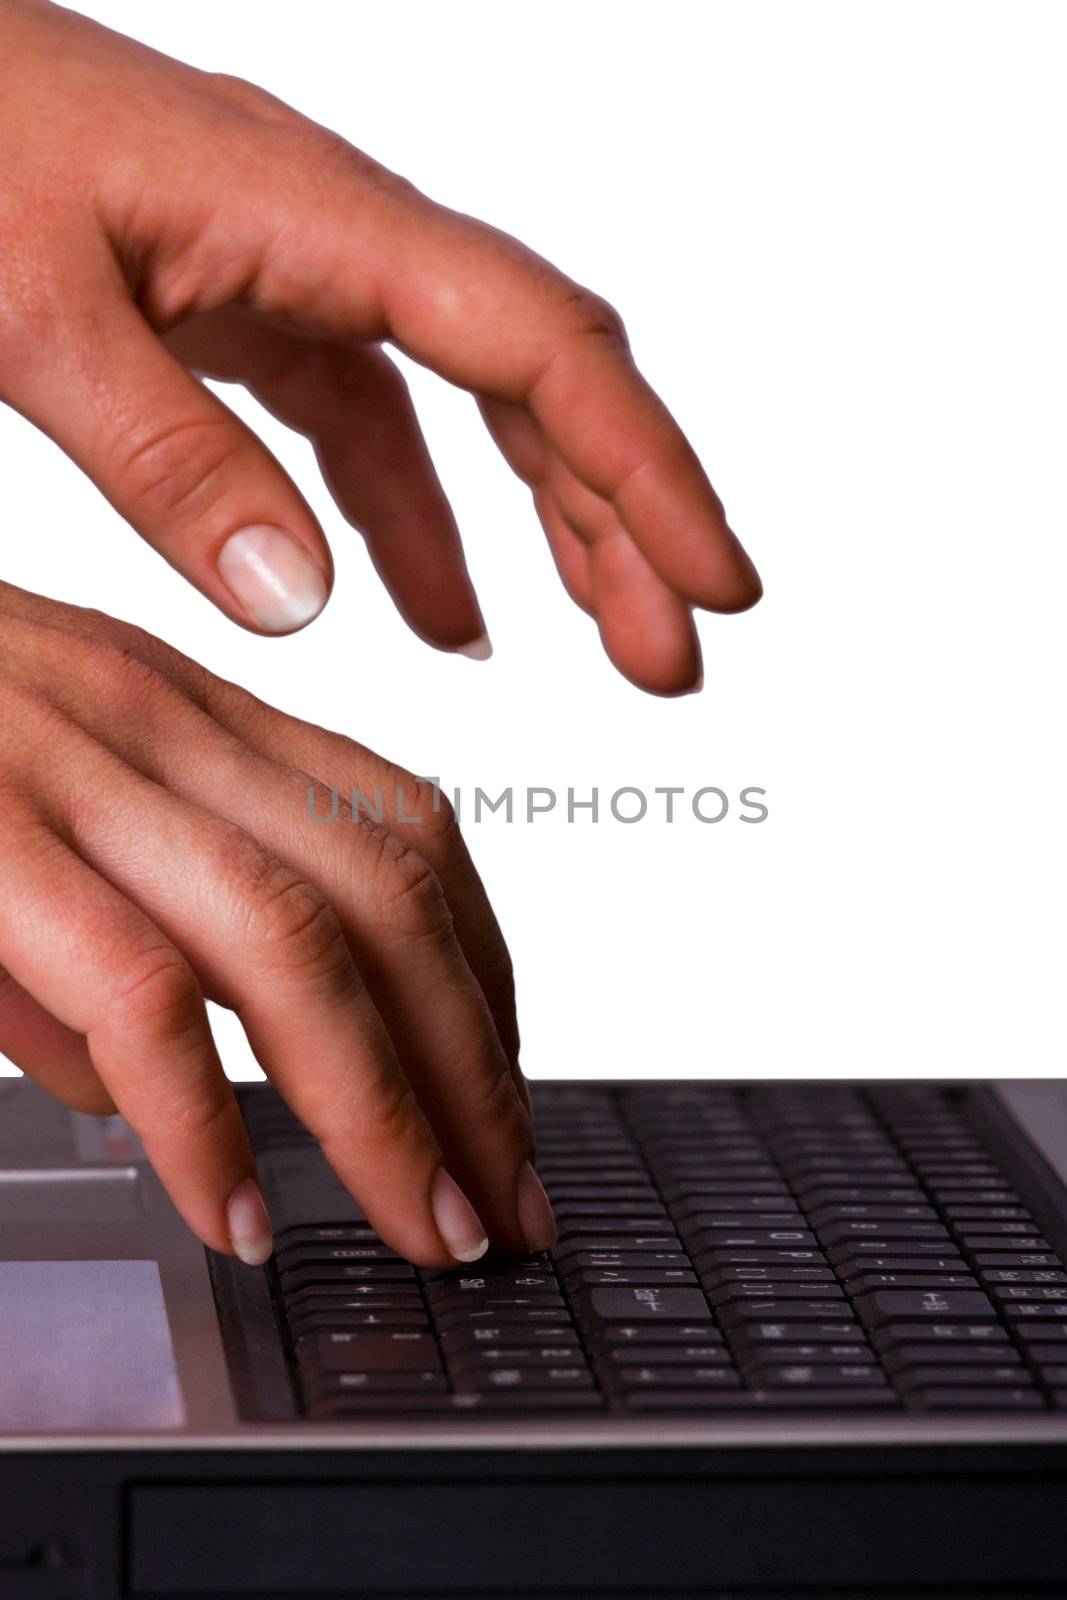 Woman working on laptop keyboard by grigorenko